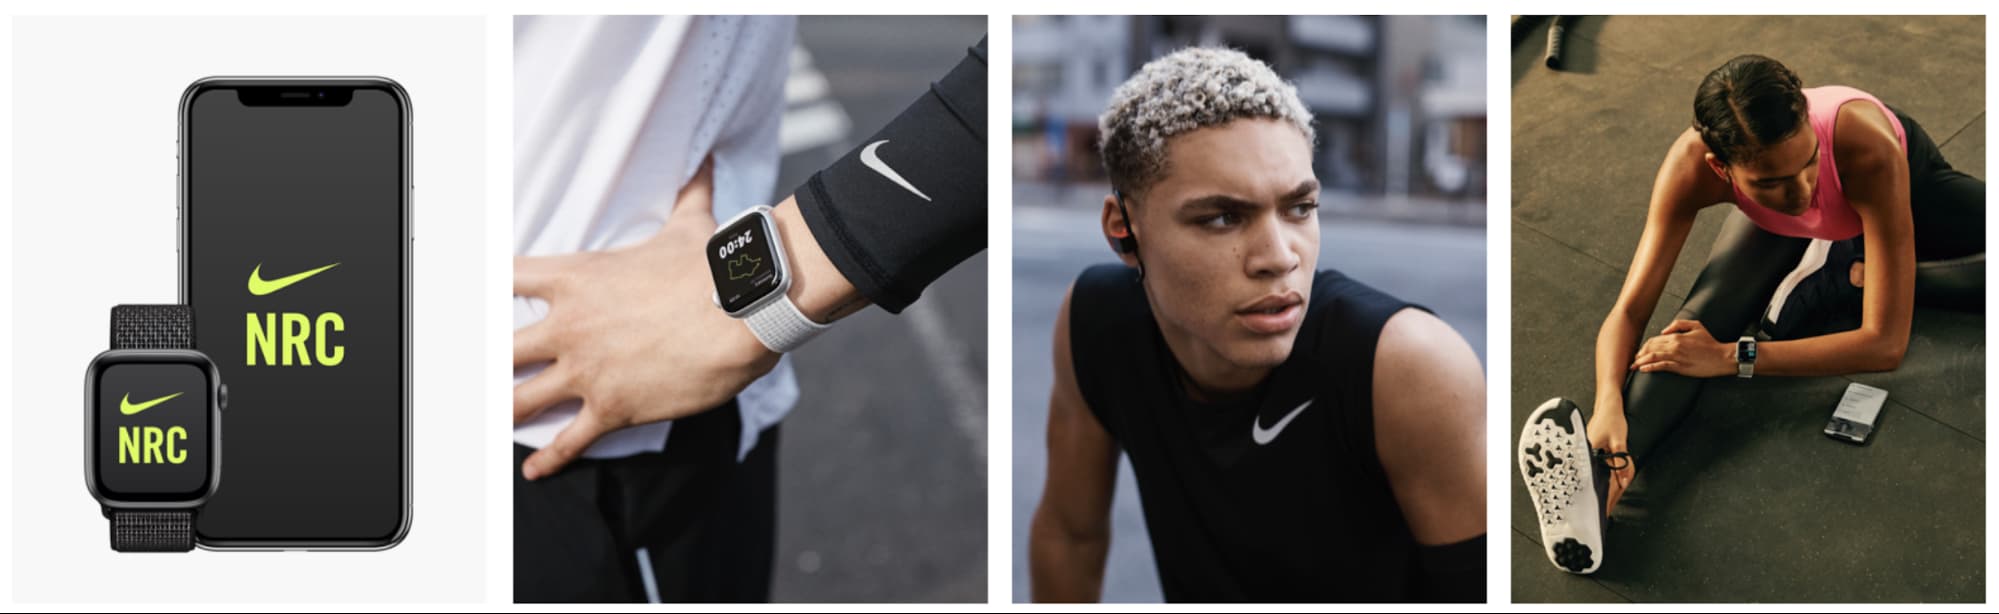 Chiến dịch của Nike + Run Club 